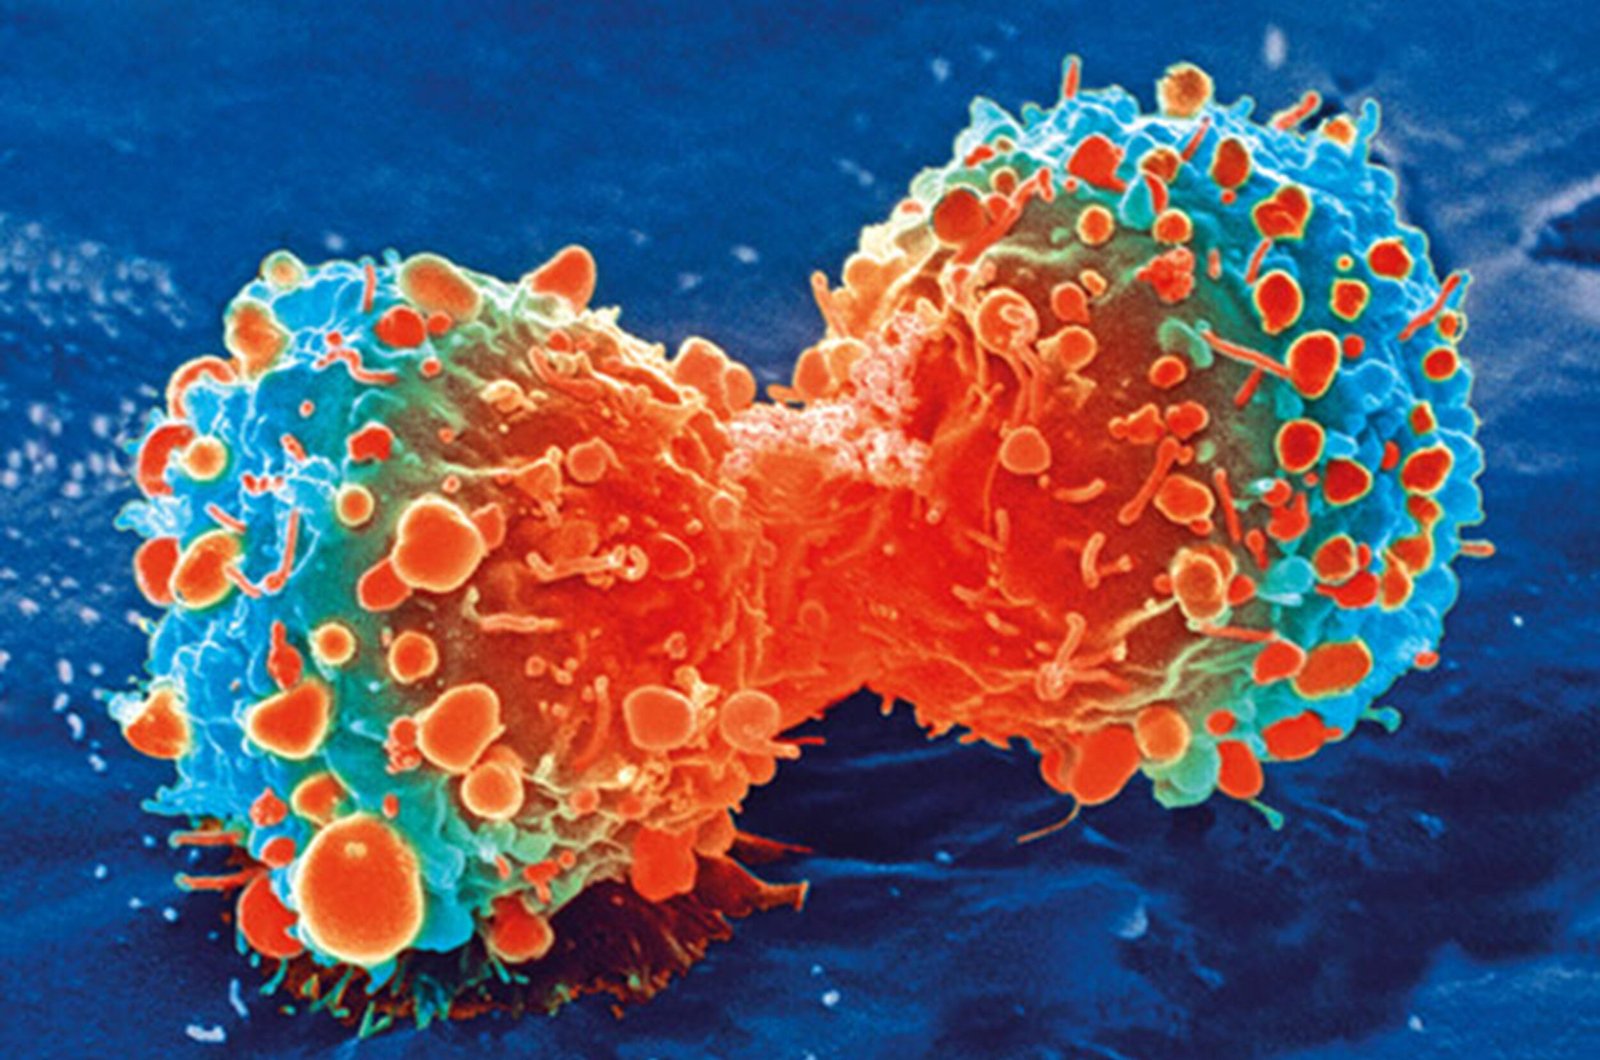 Ultrasensitive liquid biopsy tech spots cancer earlier than standard methods